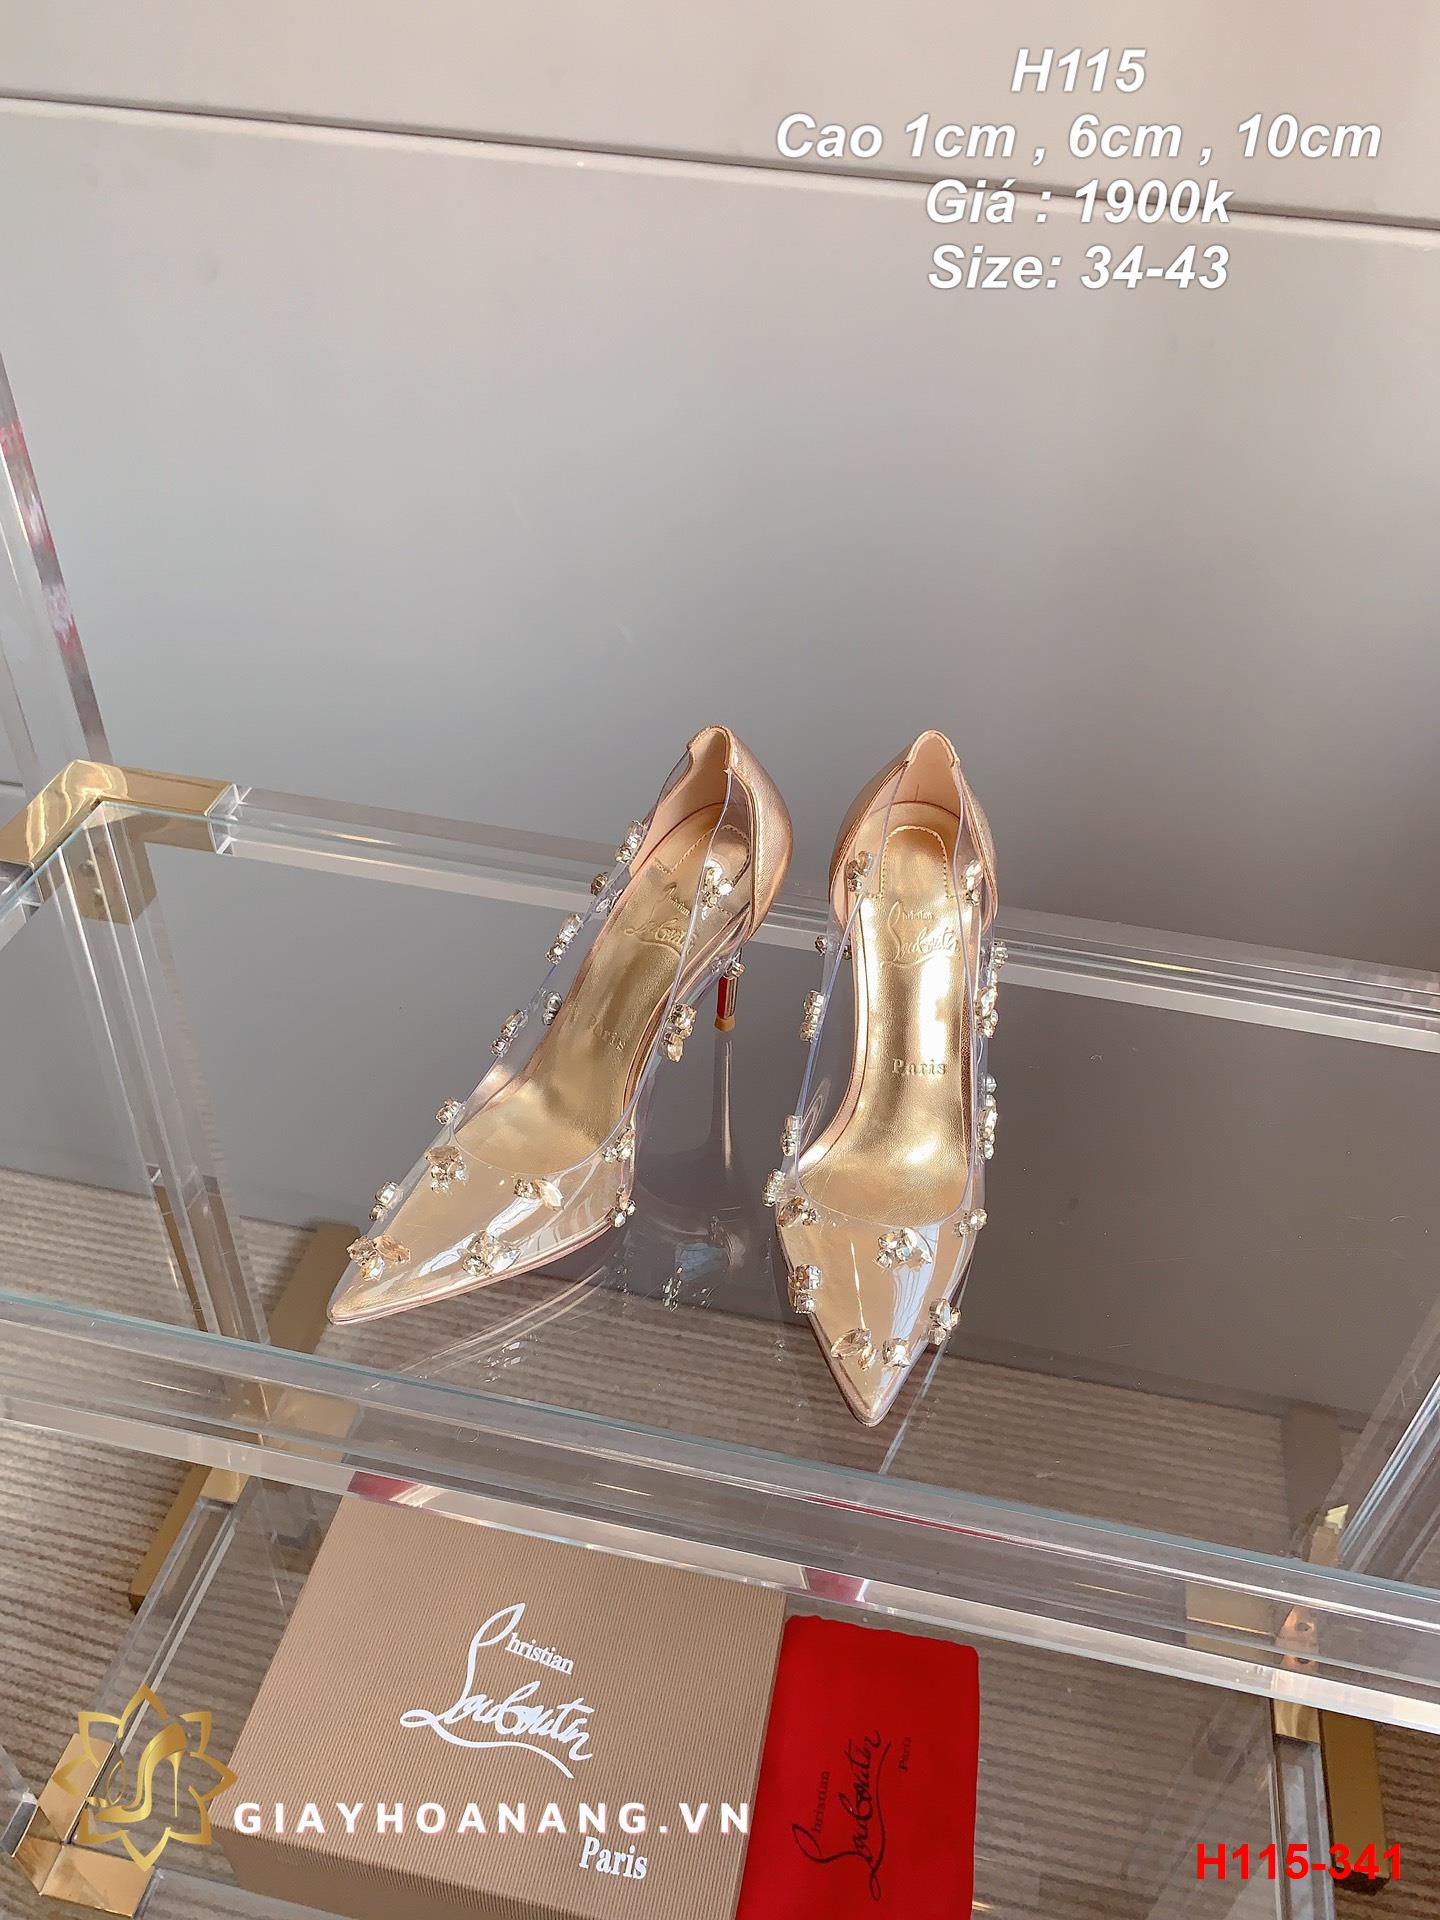 H115-341 Louboutin giày cao 1cm , 6cm , 10cm siêu cấp